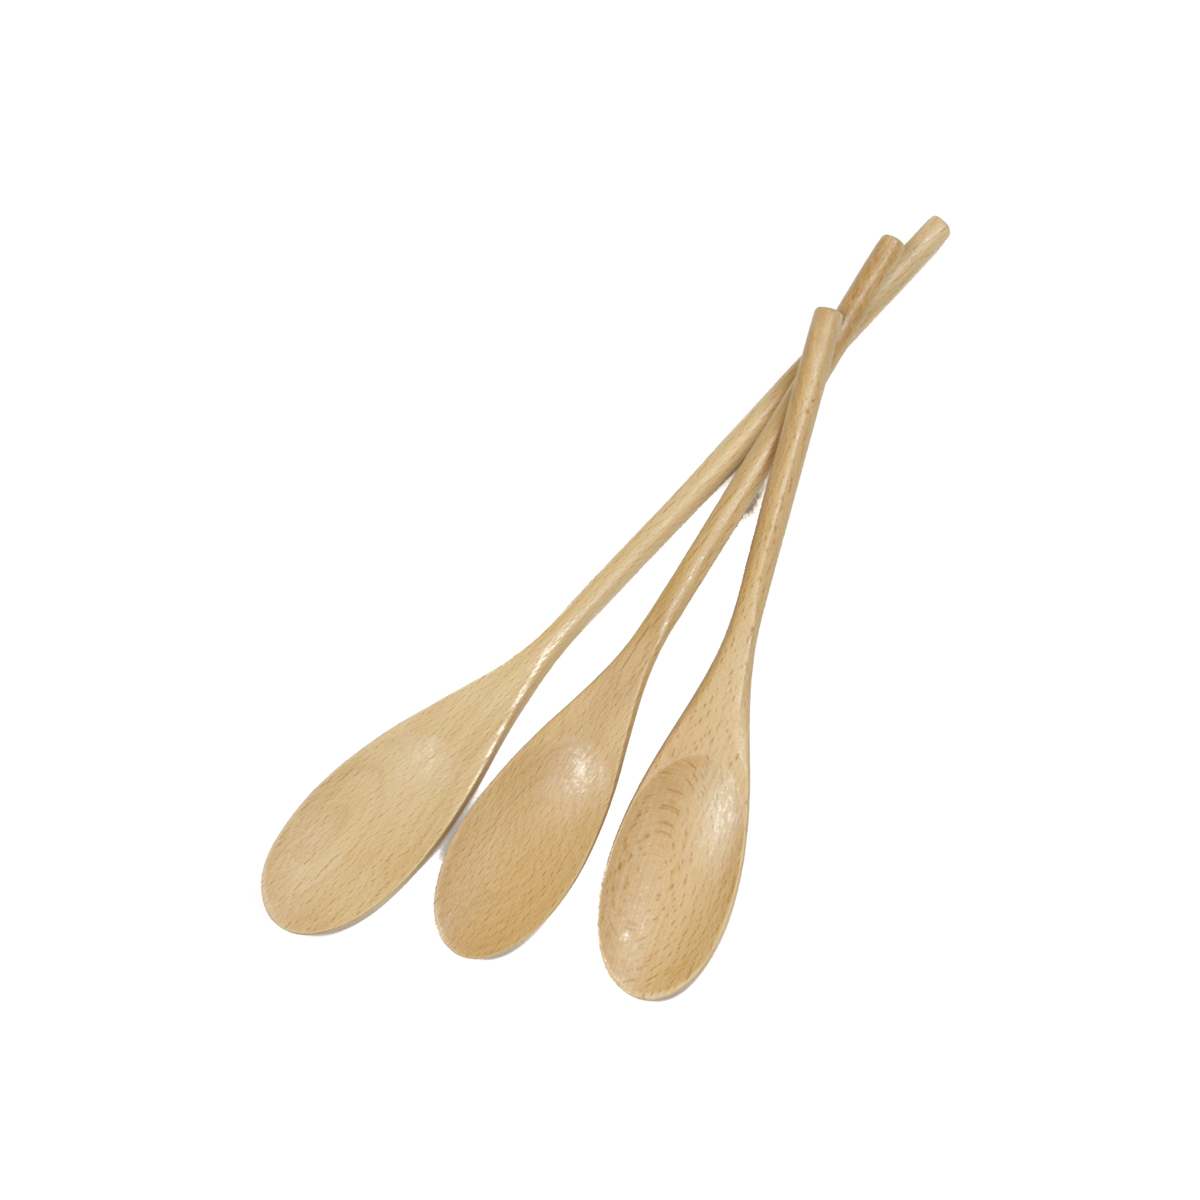 Wholesale 3PK Wood Spoons(24x.59)